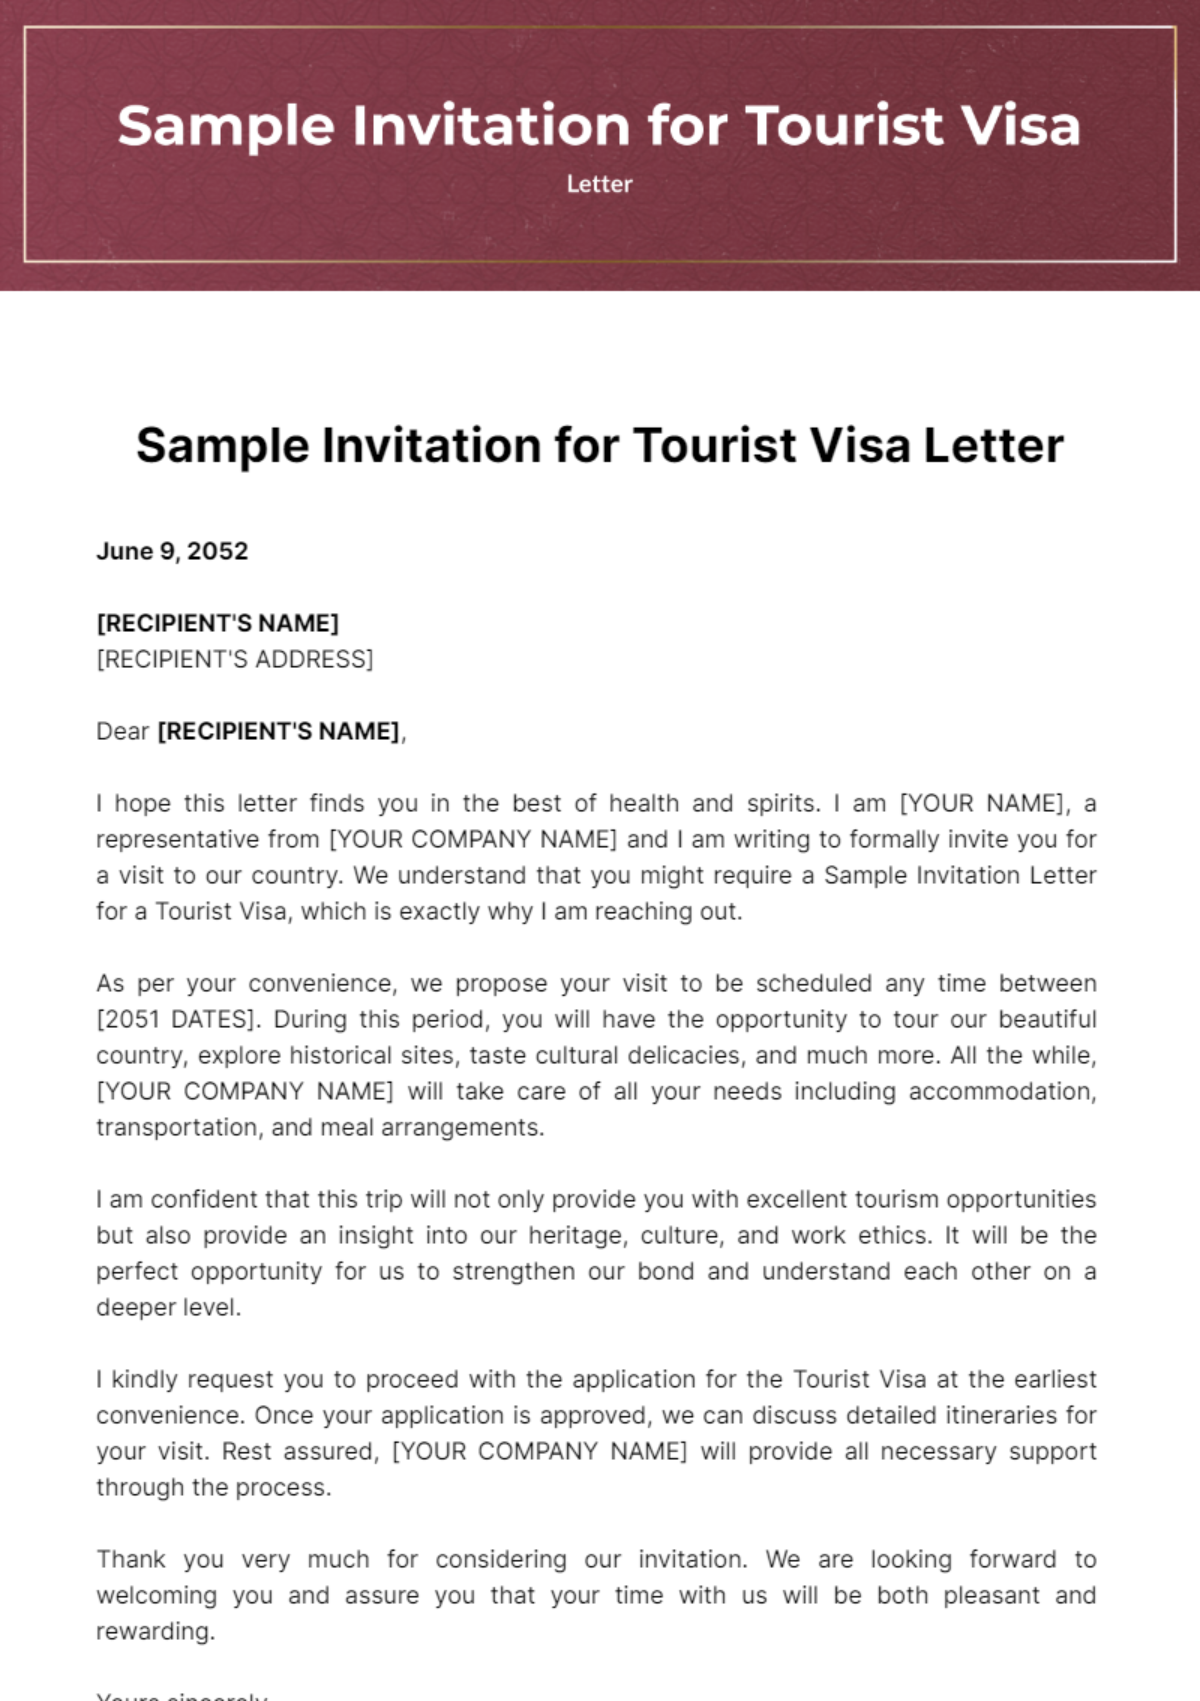 Free Sample Invitation Letter for Tourist Visa Template